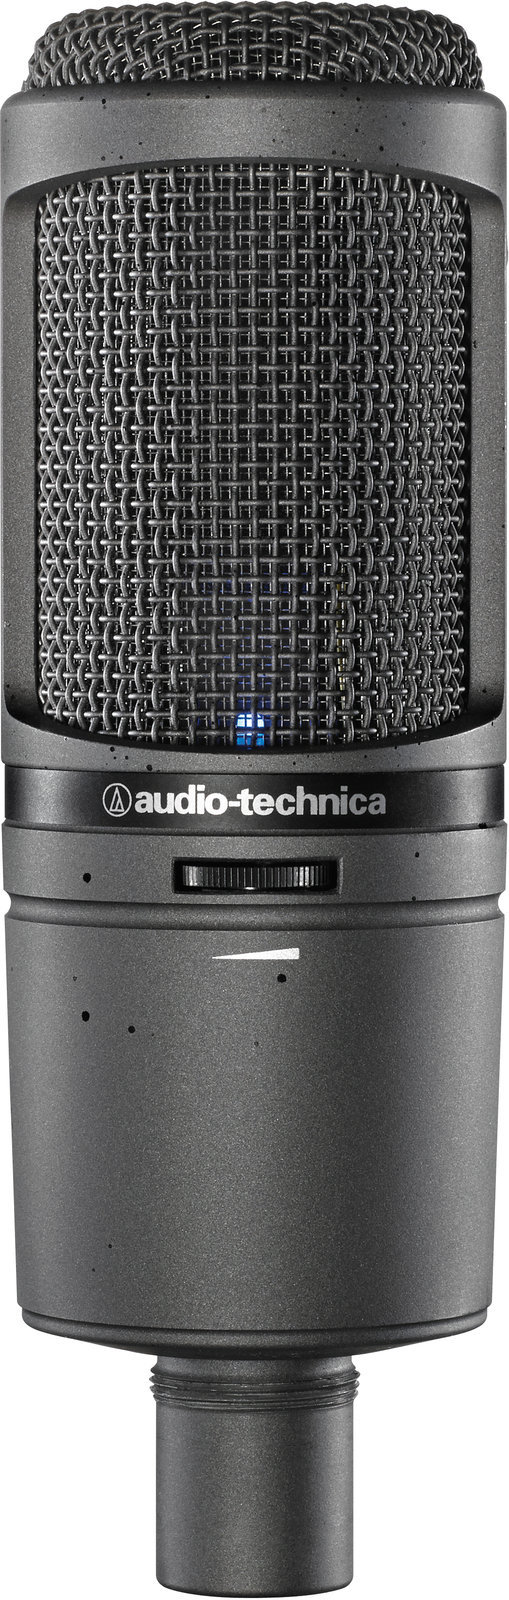 USB-microfoon Audio-Technica AT2020USBi